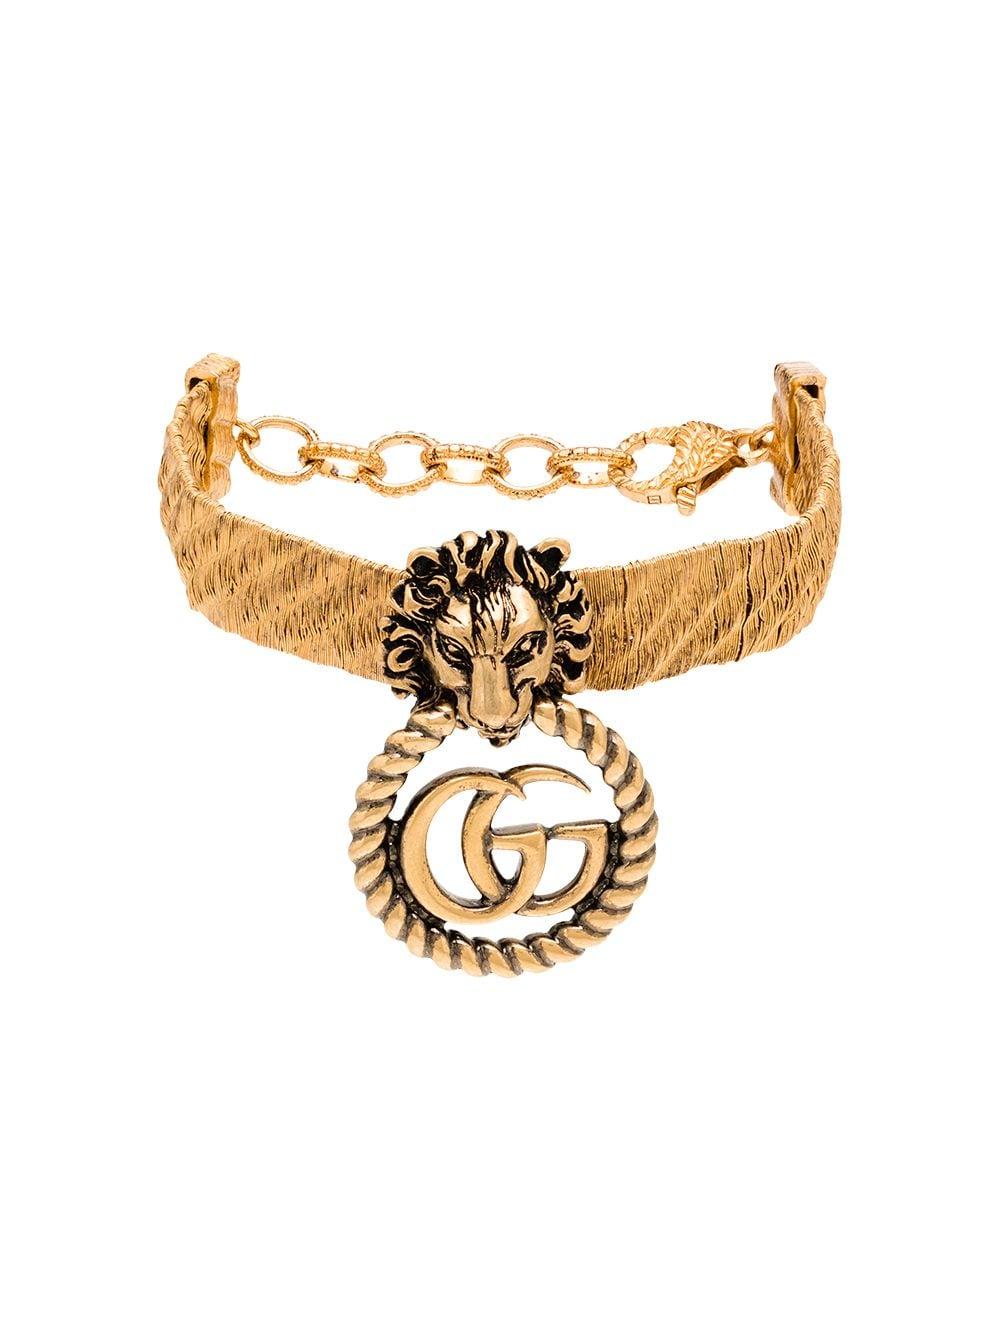 Gold Lion Head Bracelet For Men Fancy 2016 Lava Rock Stone Mens Beaded  Bracelets Jewelry In Natural Stone Finish SN0629 From Stephense, $14.67 |  DHgate.Com